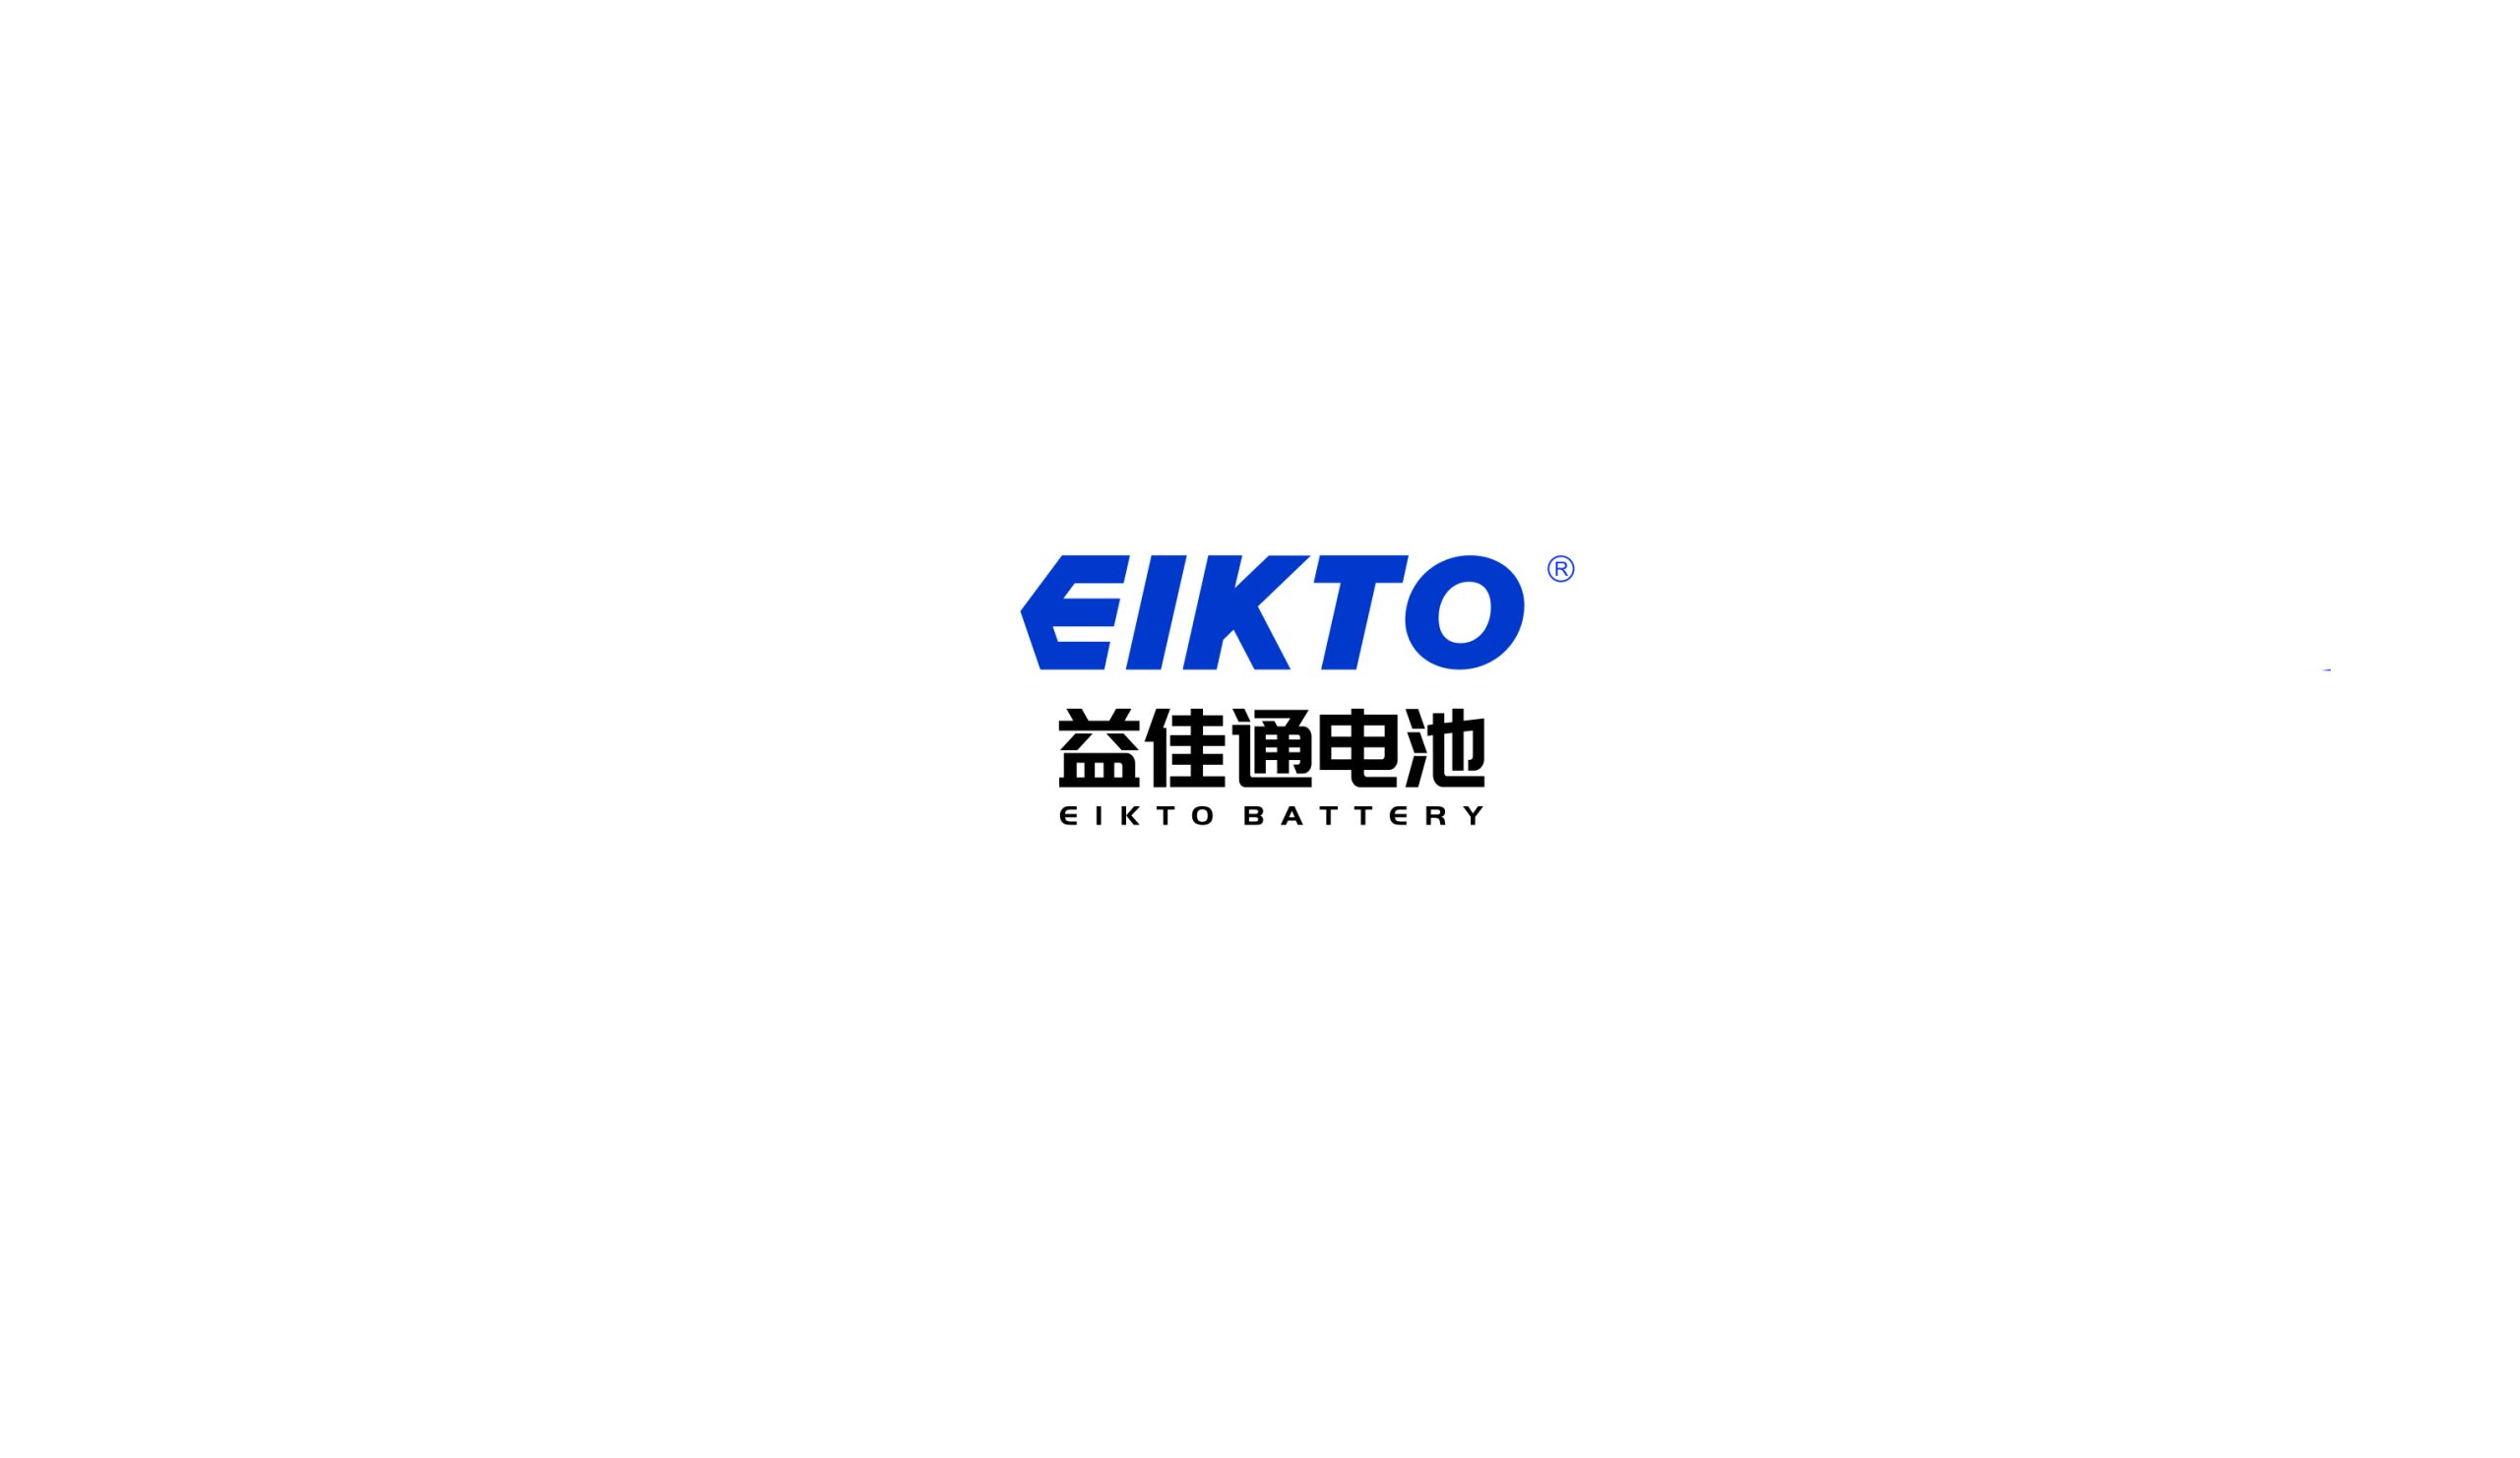 Anhui EIKTO Battery Co., Ltd